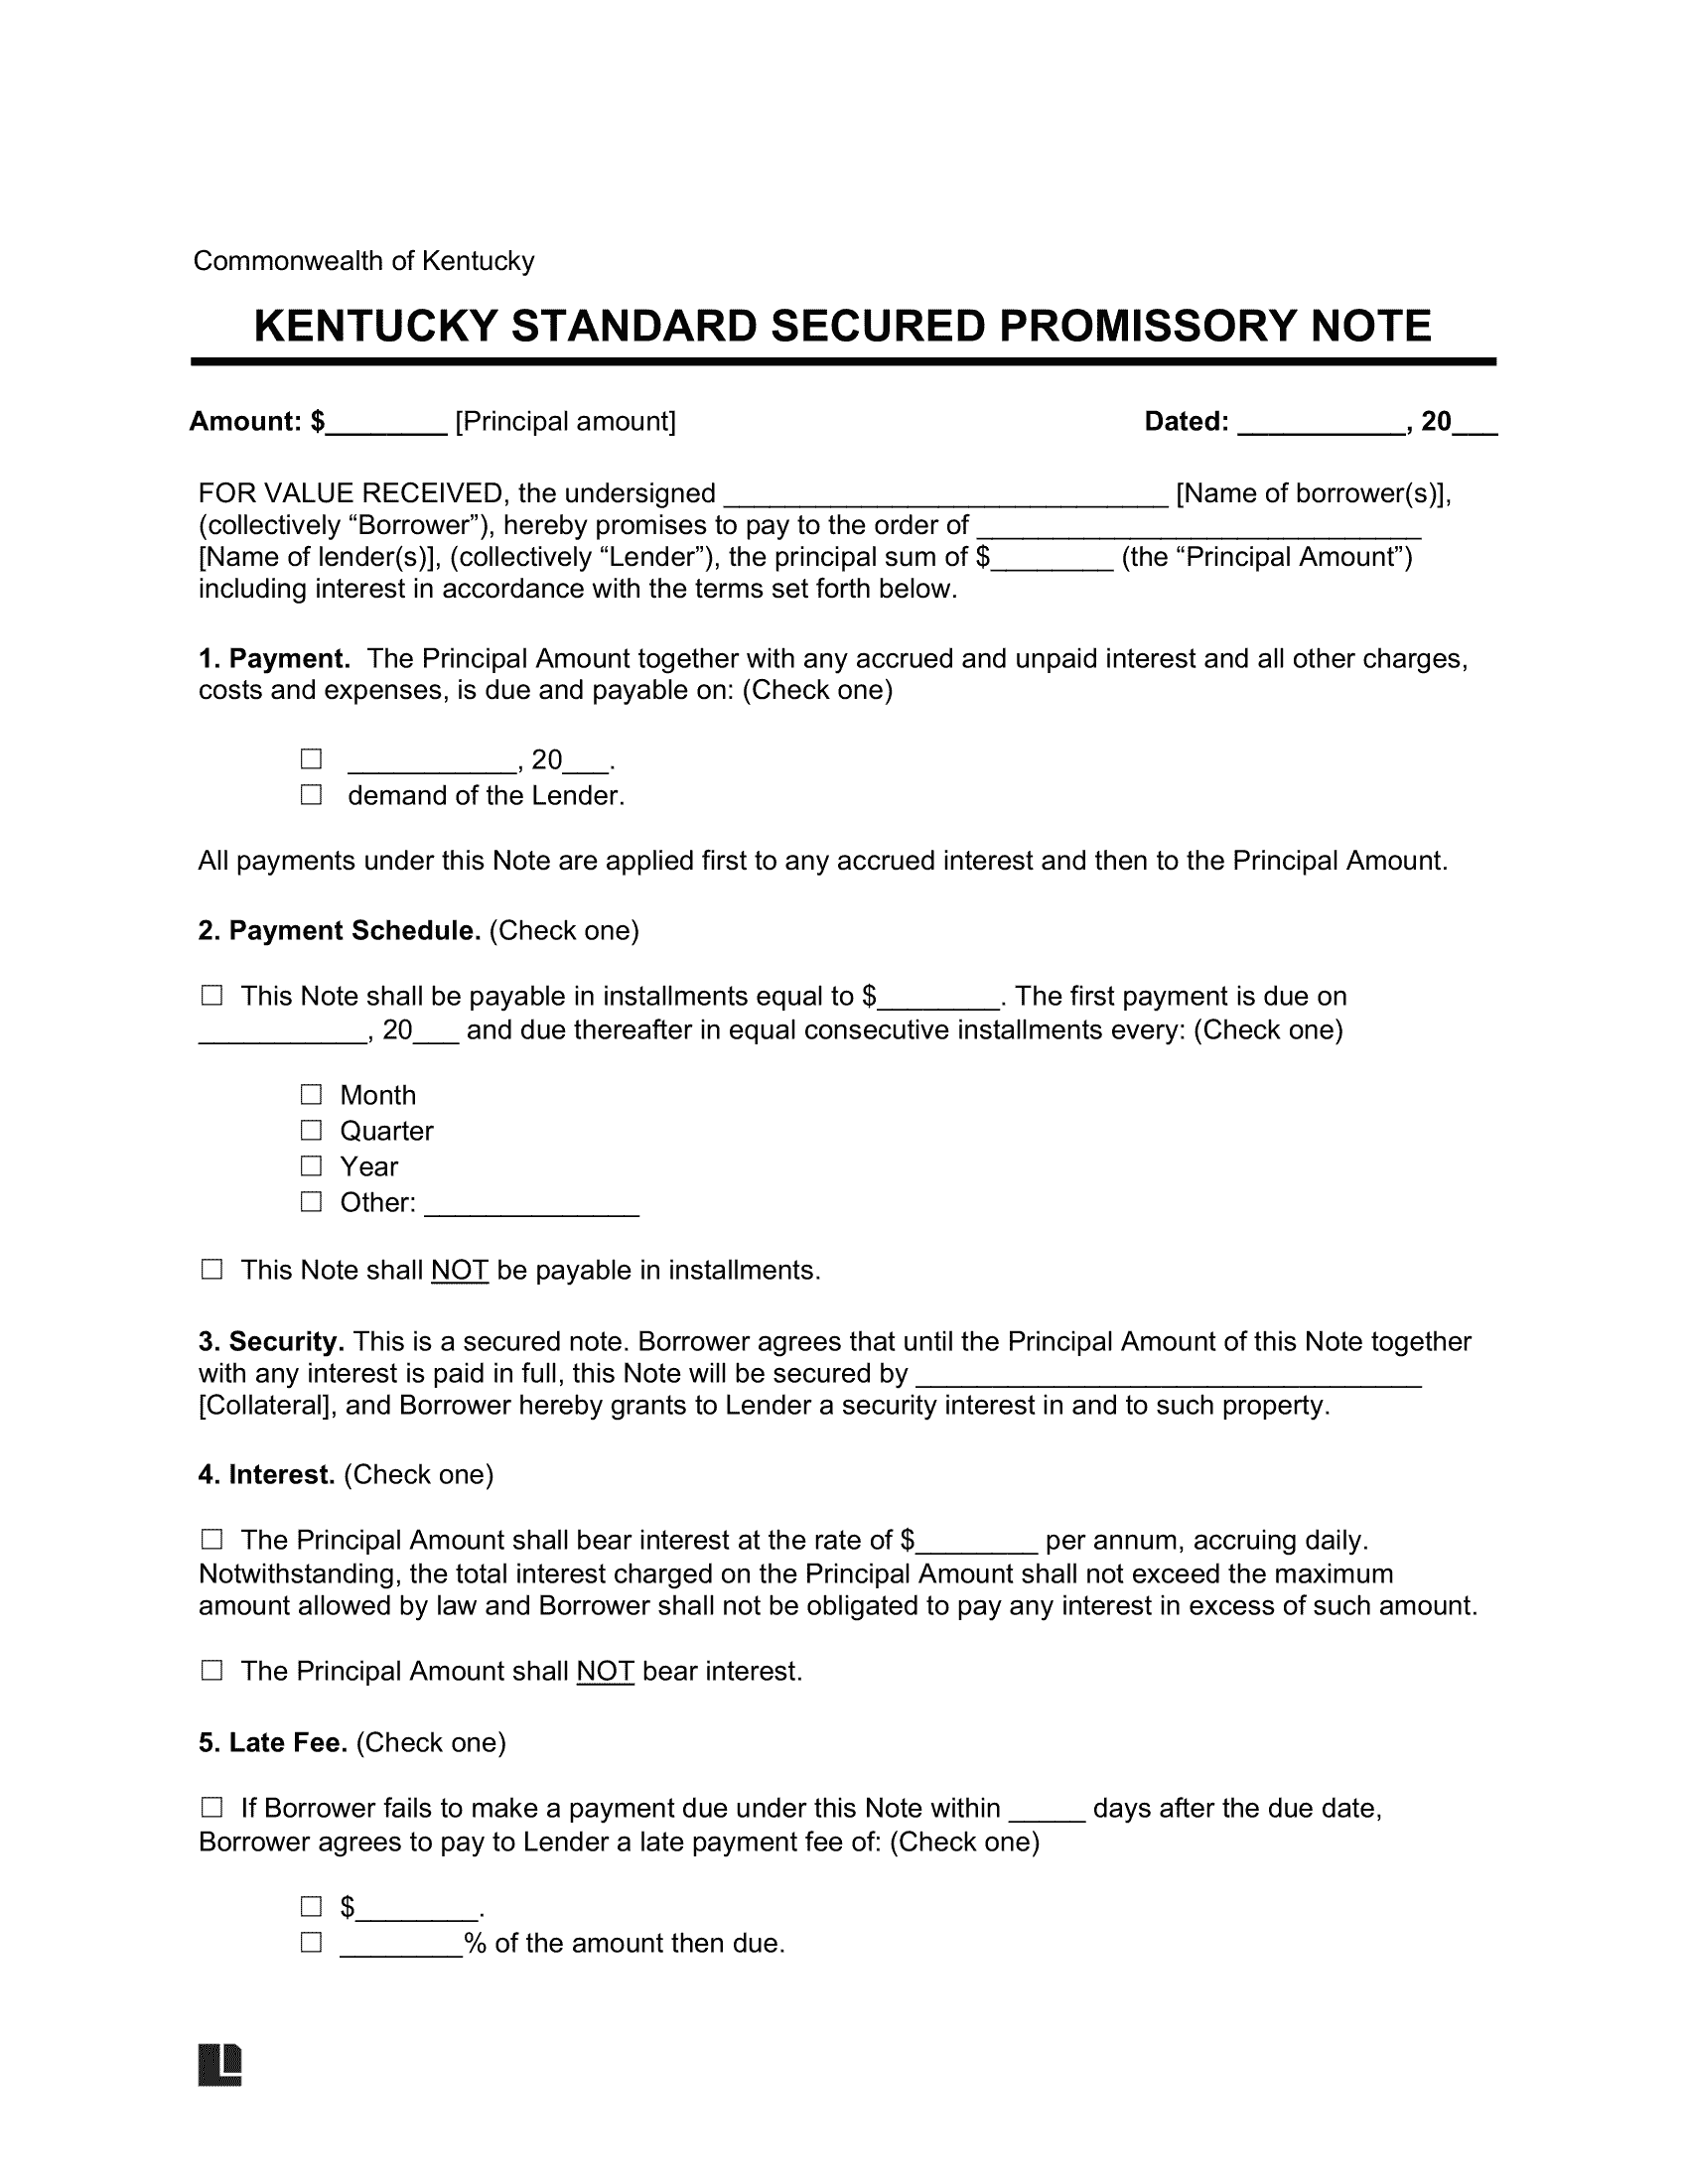 Kentucky Standard Secured Promissory Note Template